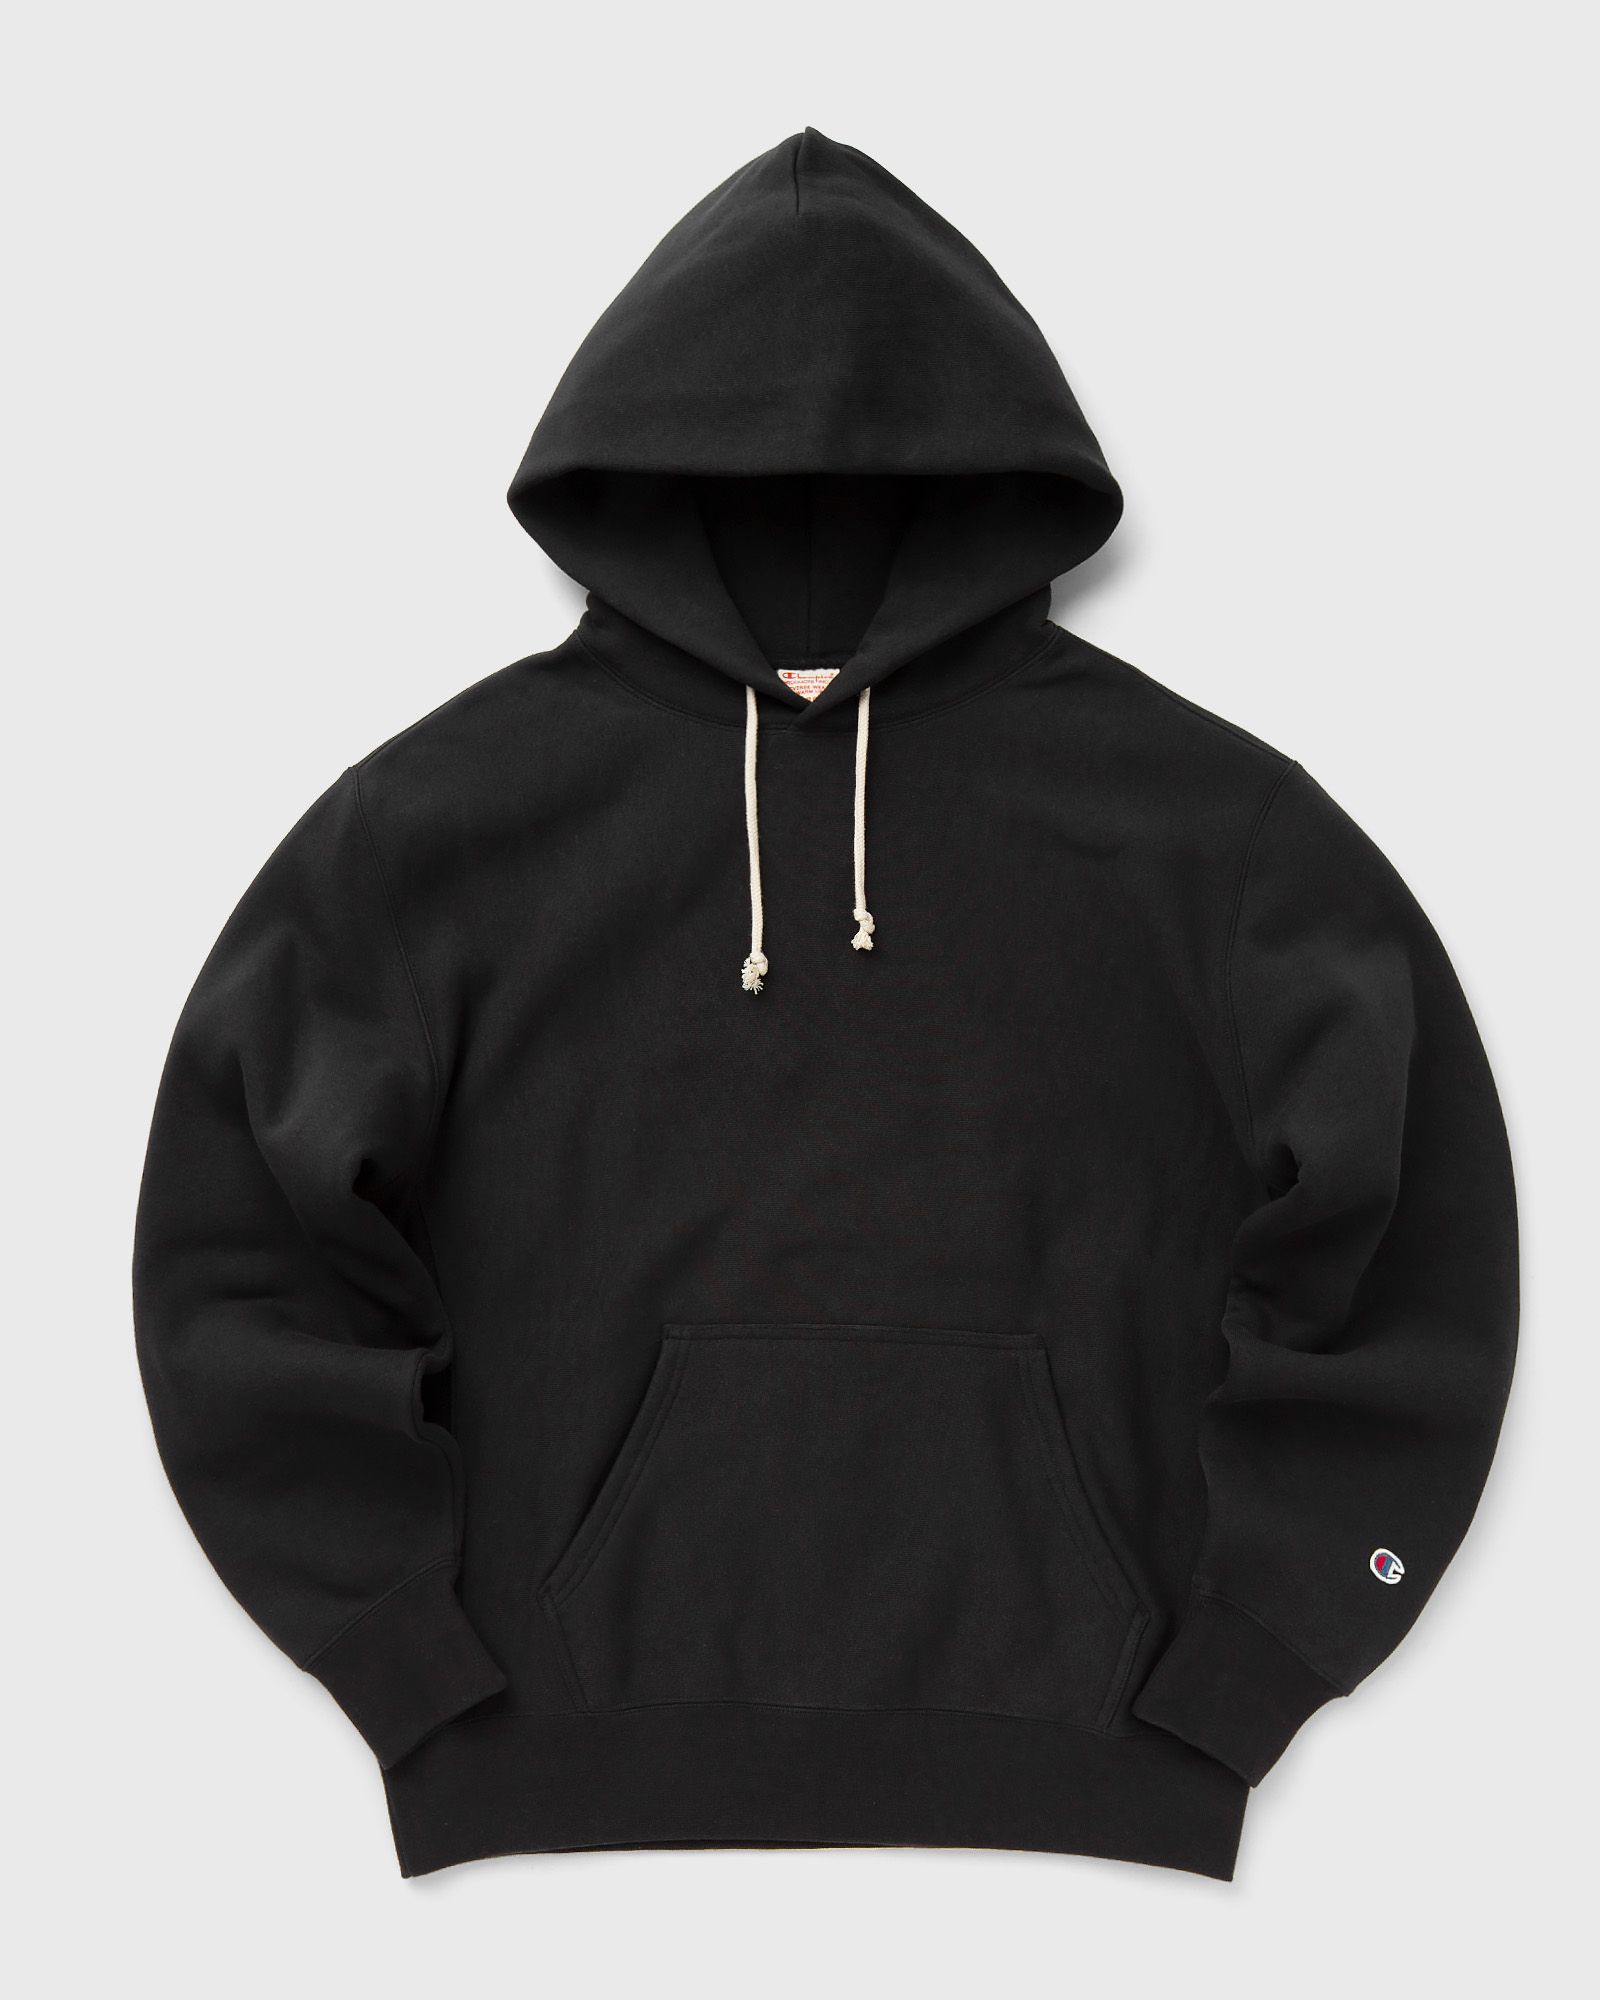 CHAMPION - hooded sweatshirt men hoodies black in größe:xl